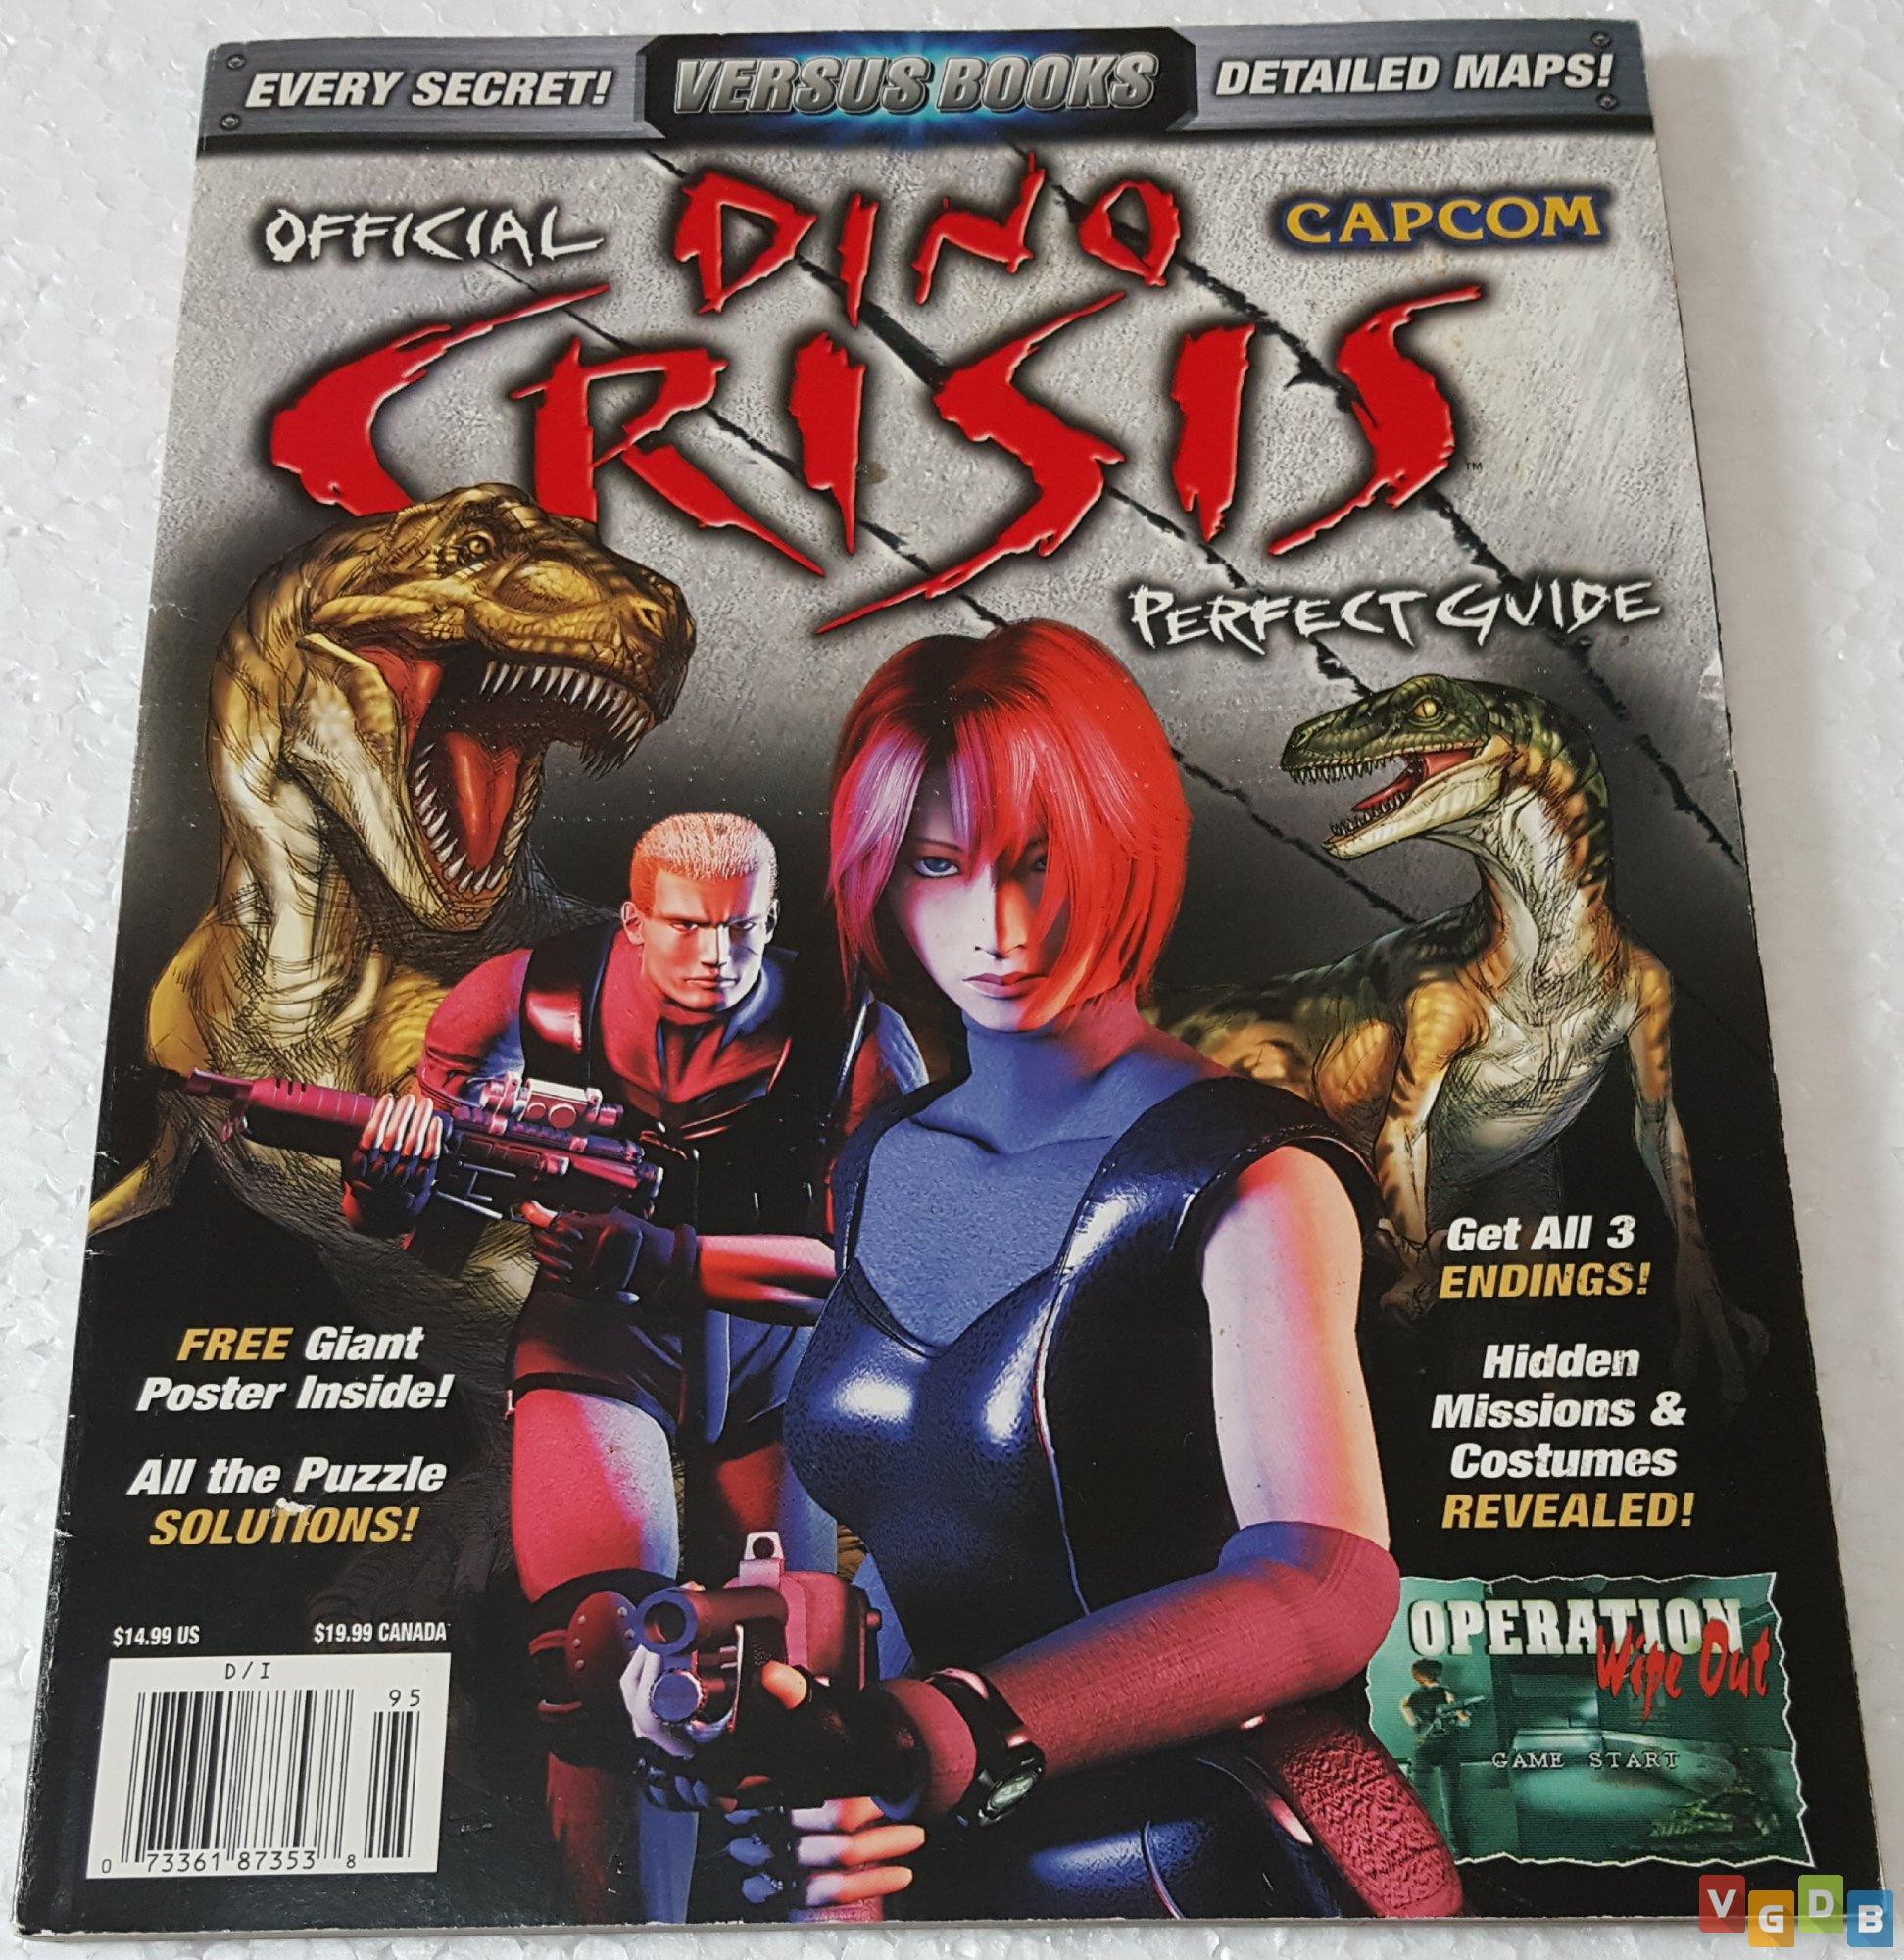 Dino Crisis® (PSOne Classic) Ps3 Psn Mídia Digital - kalangoboygames